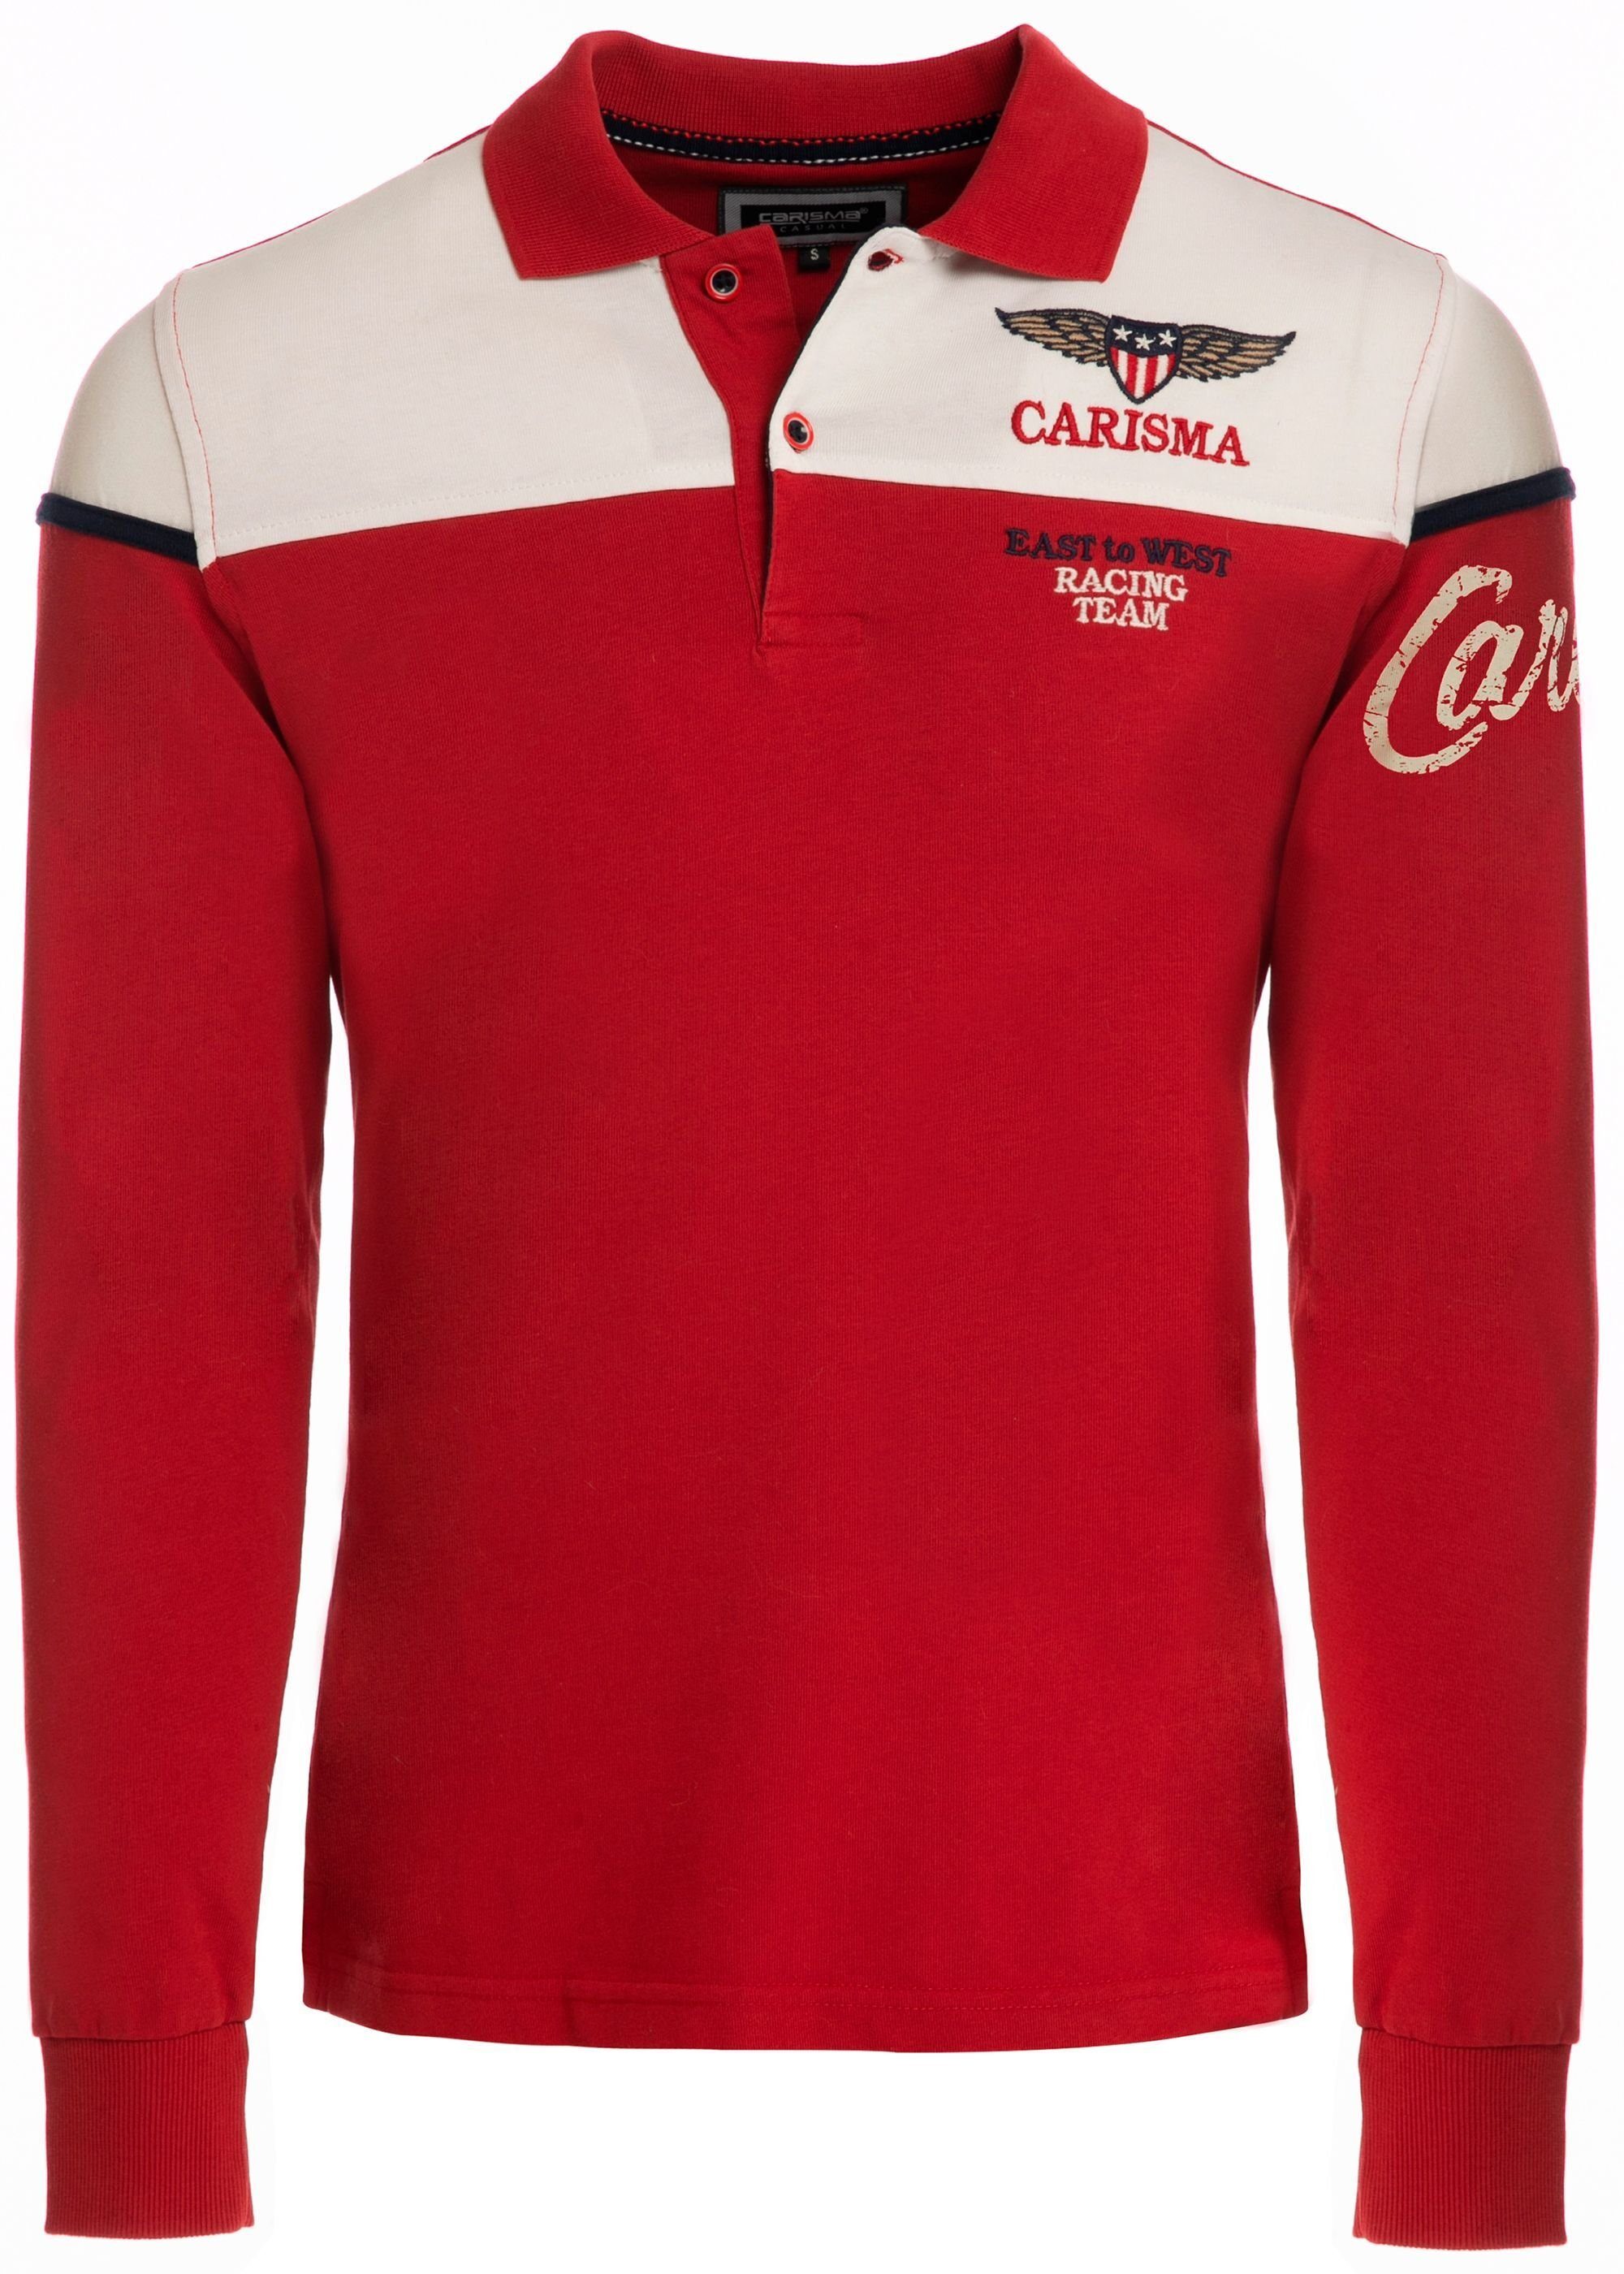 CARISMA Poloshirt mit Stickerei Rugby Team Red | Poloshirts